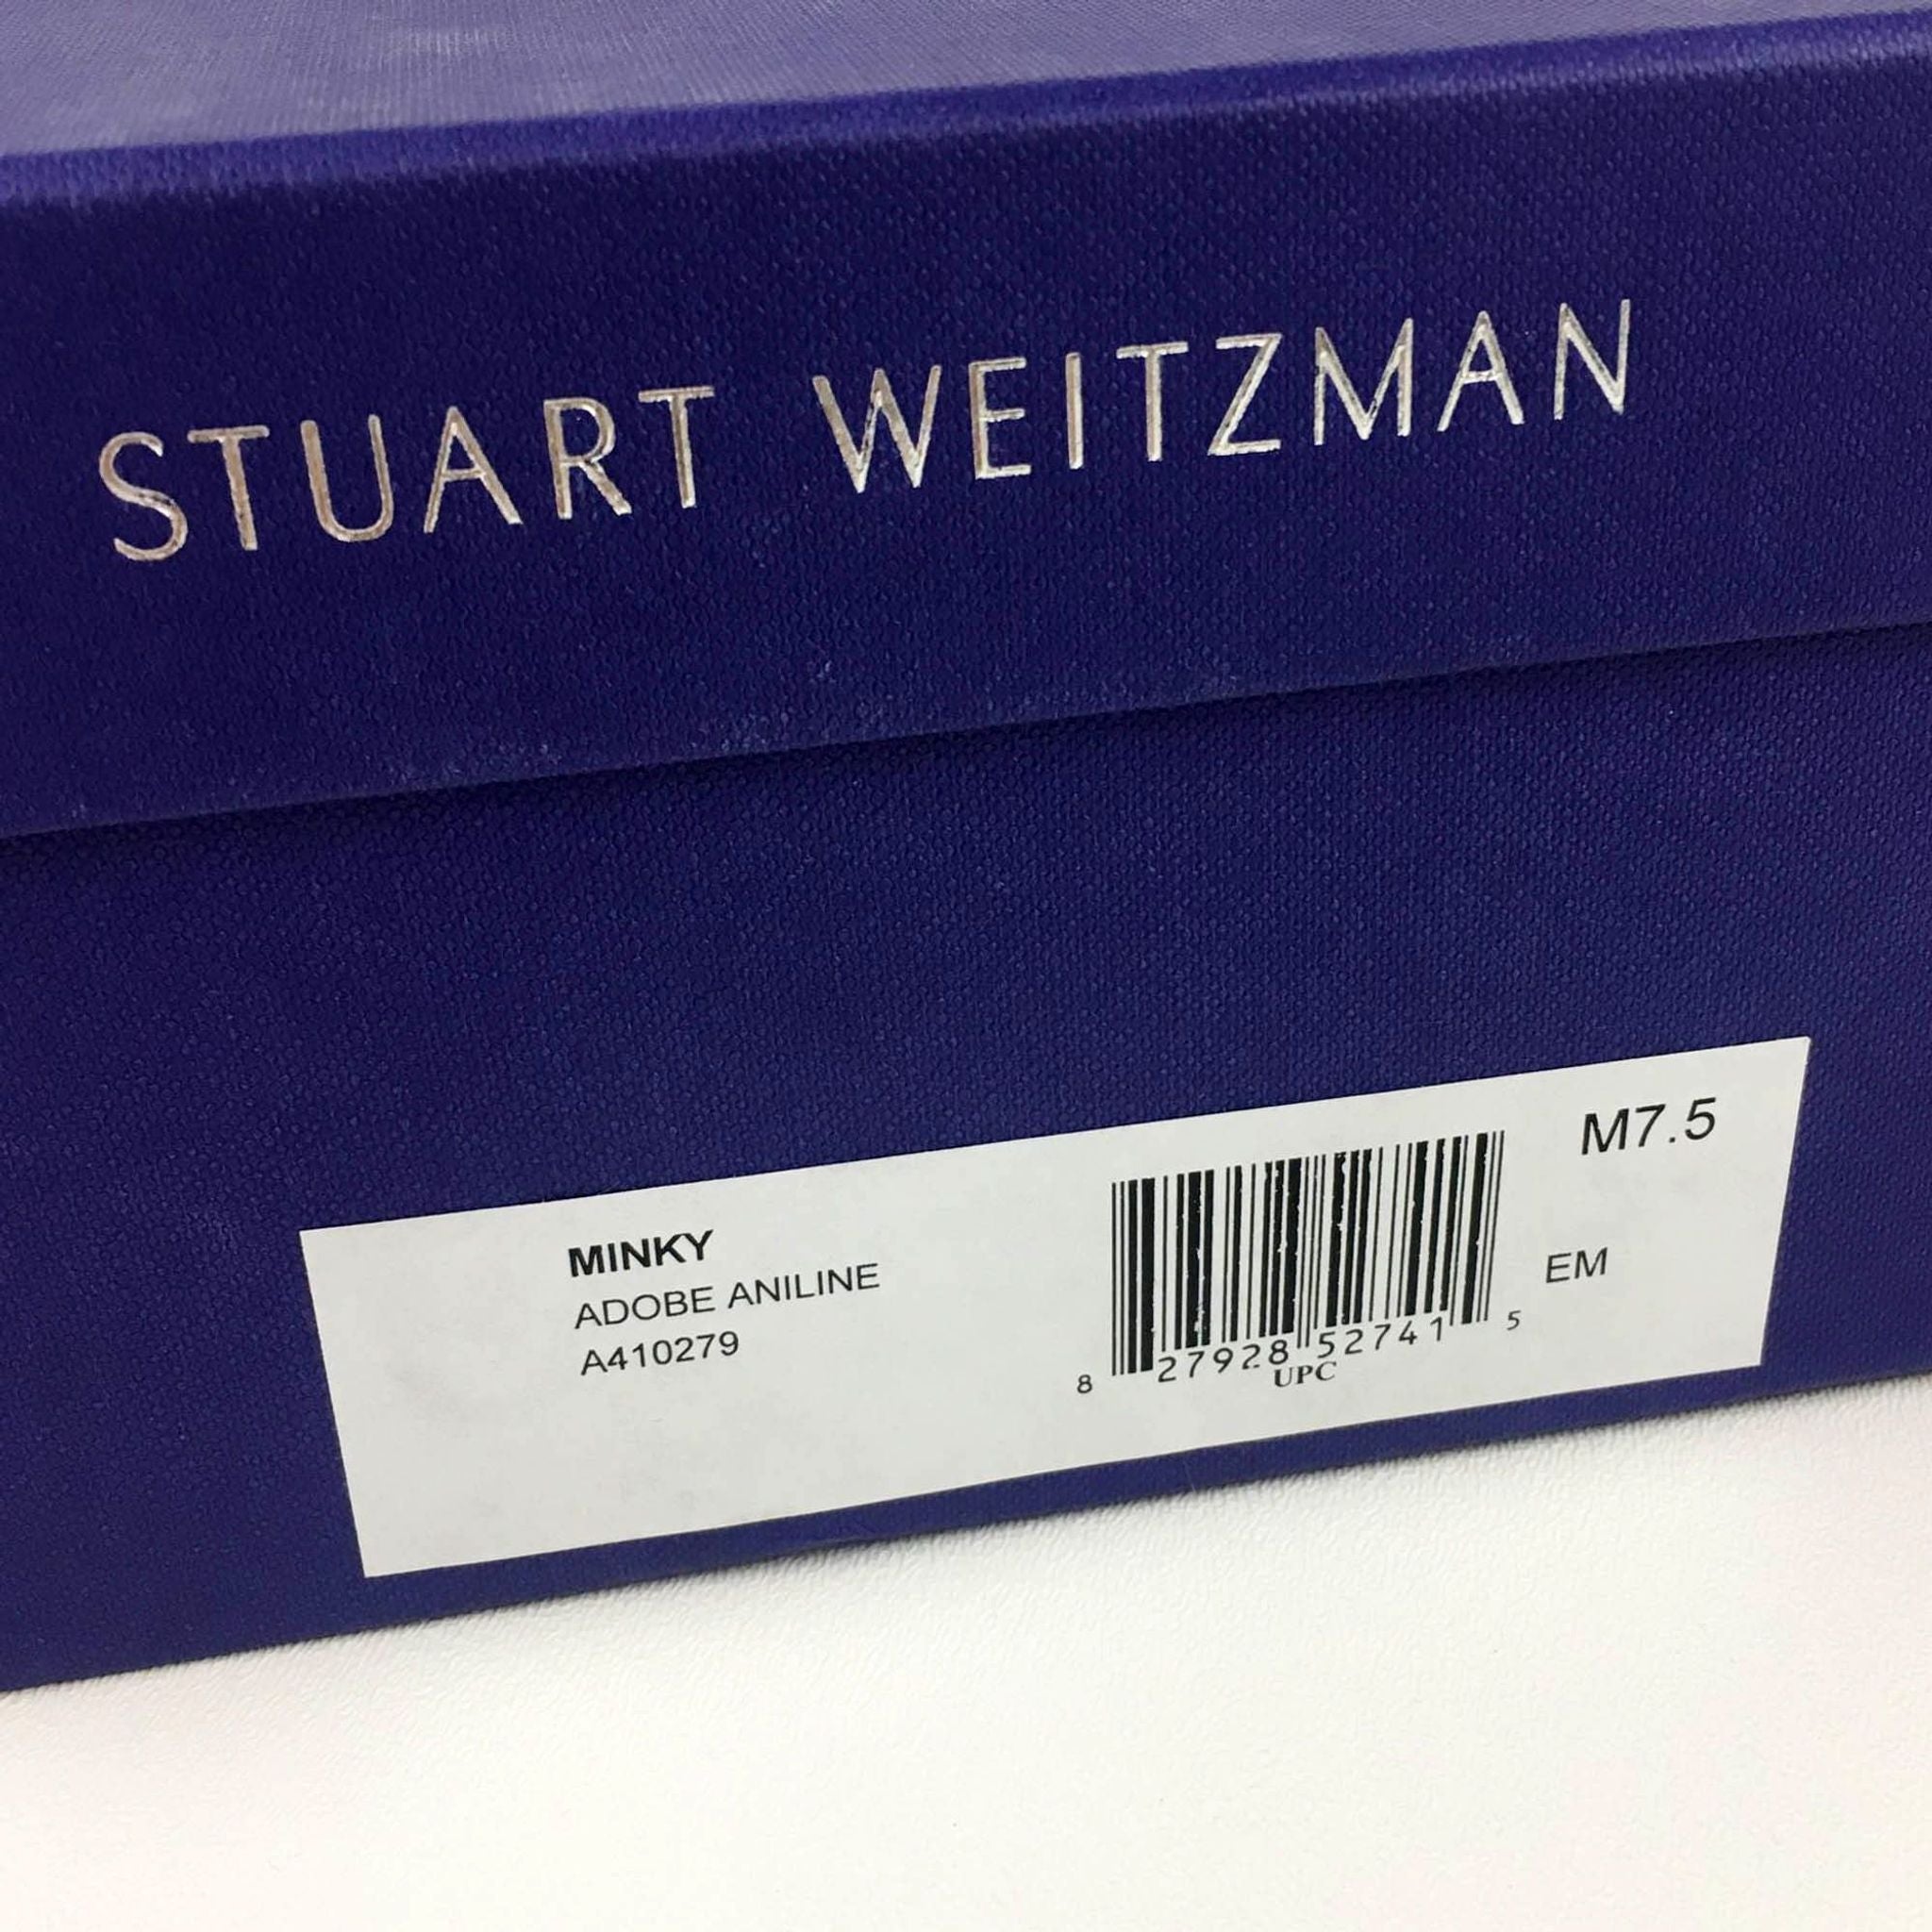 2. Close-up of a Stuart Weitzman shoe box label indicating model Minky, color Adobe Aniline, size 7.5.